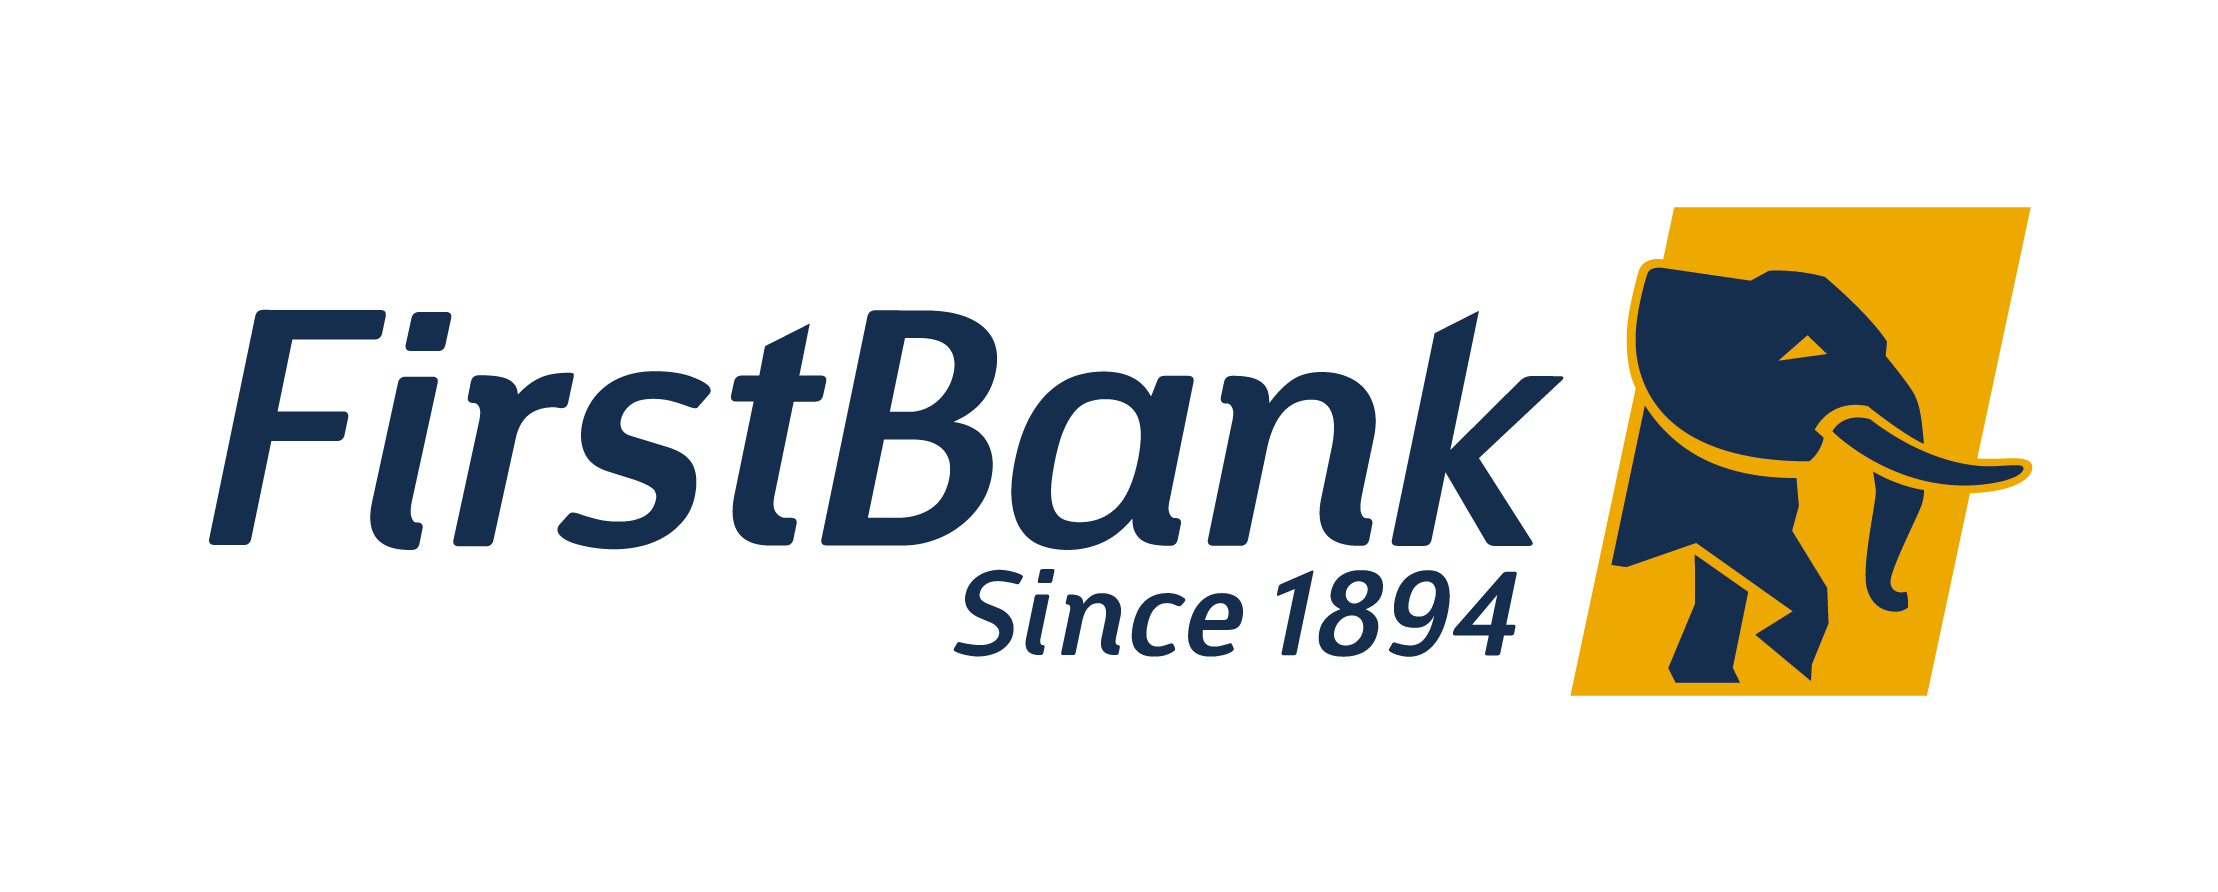 1 first bank. First Bank. First Bank logo. First Bank of Nigeria. First Trust Bank logo.